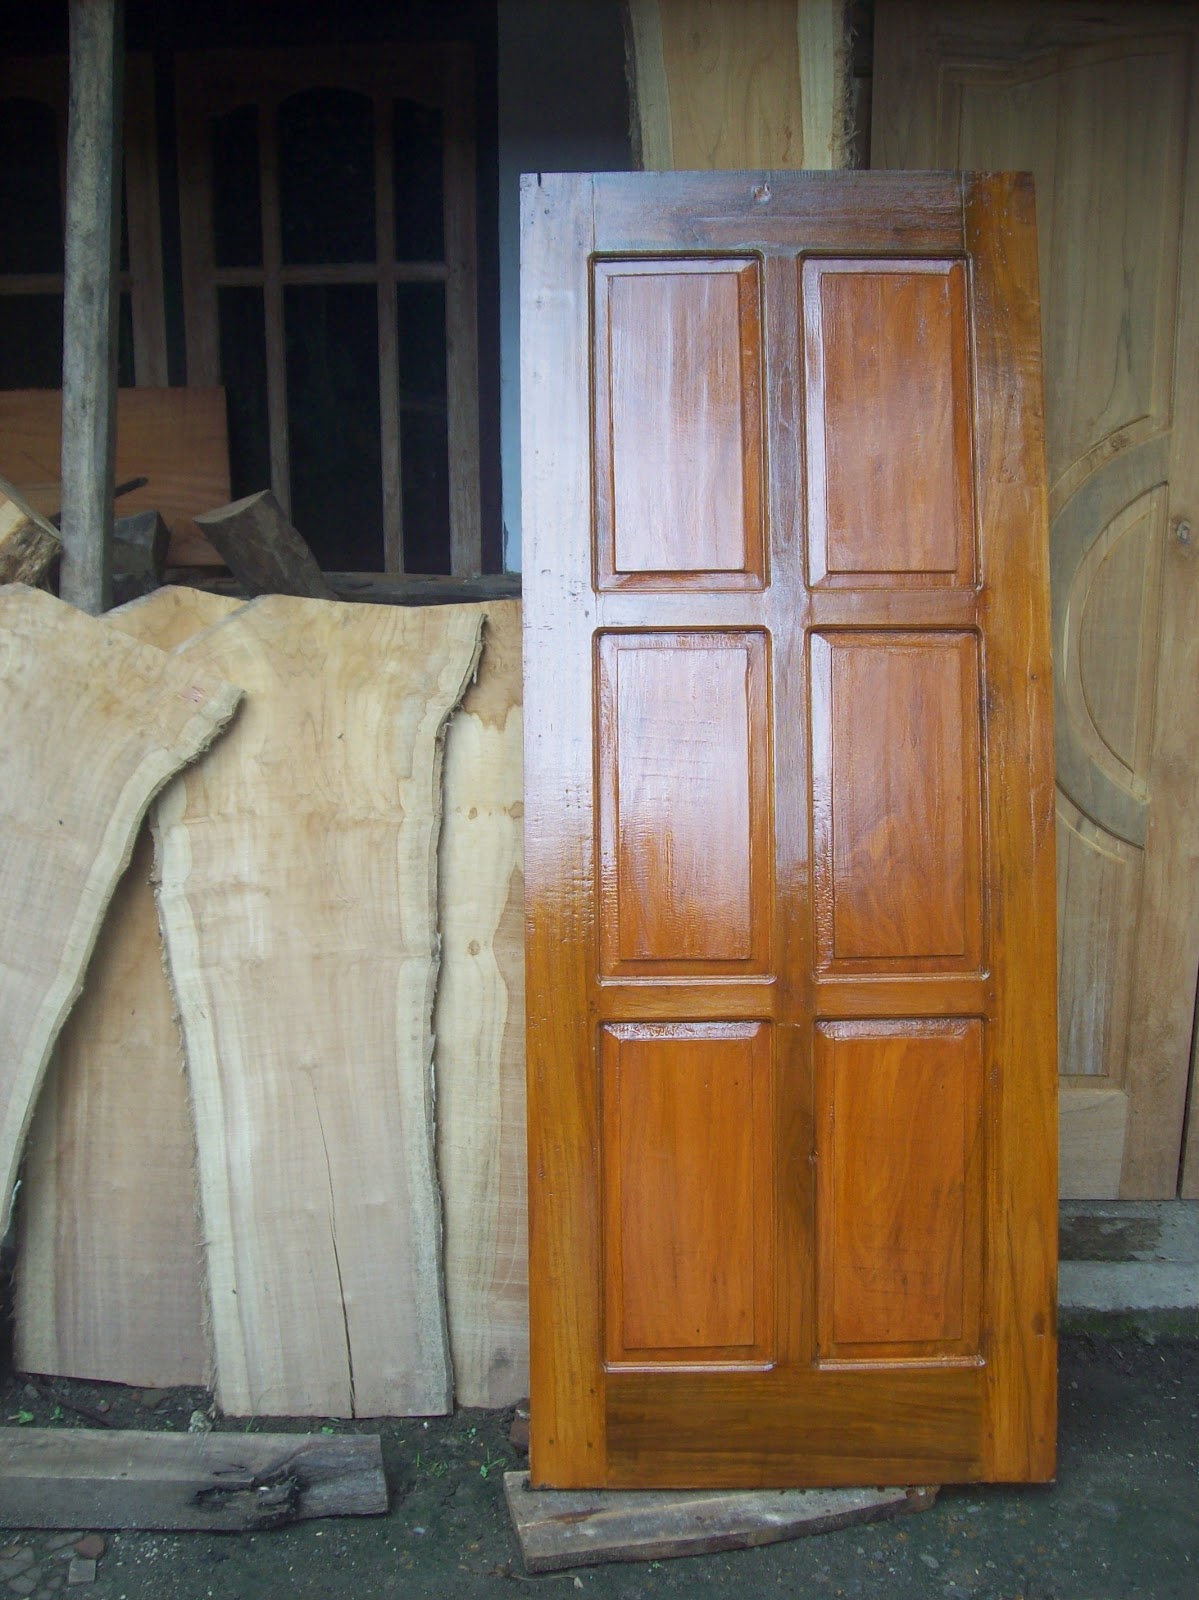 Harga Pintu Bilik Air Biasa - Pintu pvc maspion, pintu pvc motif kayu